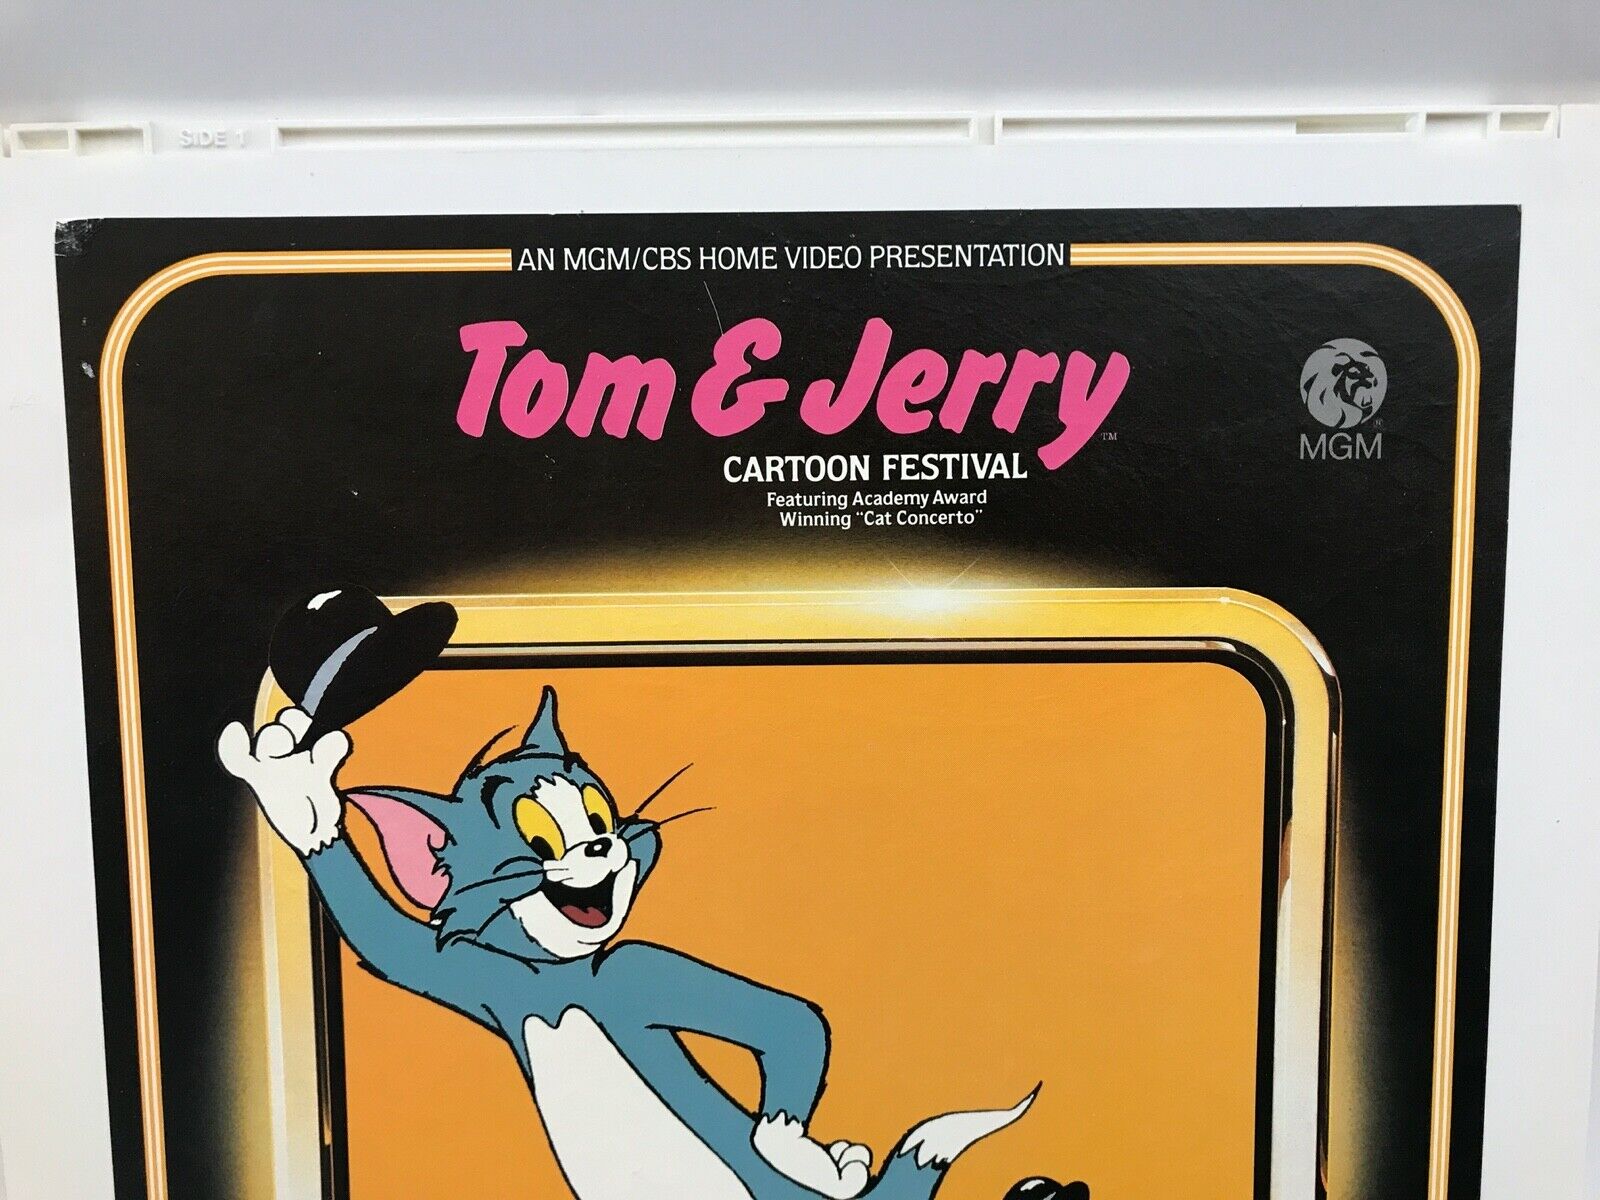 Tom & Jerry Cartoon Festival CED Video Disc Vintage 74643714327 | eBay